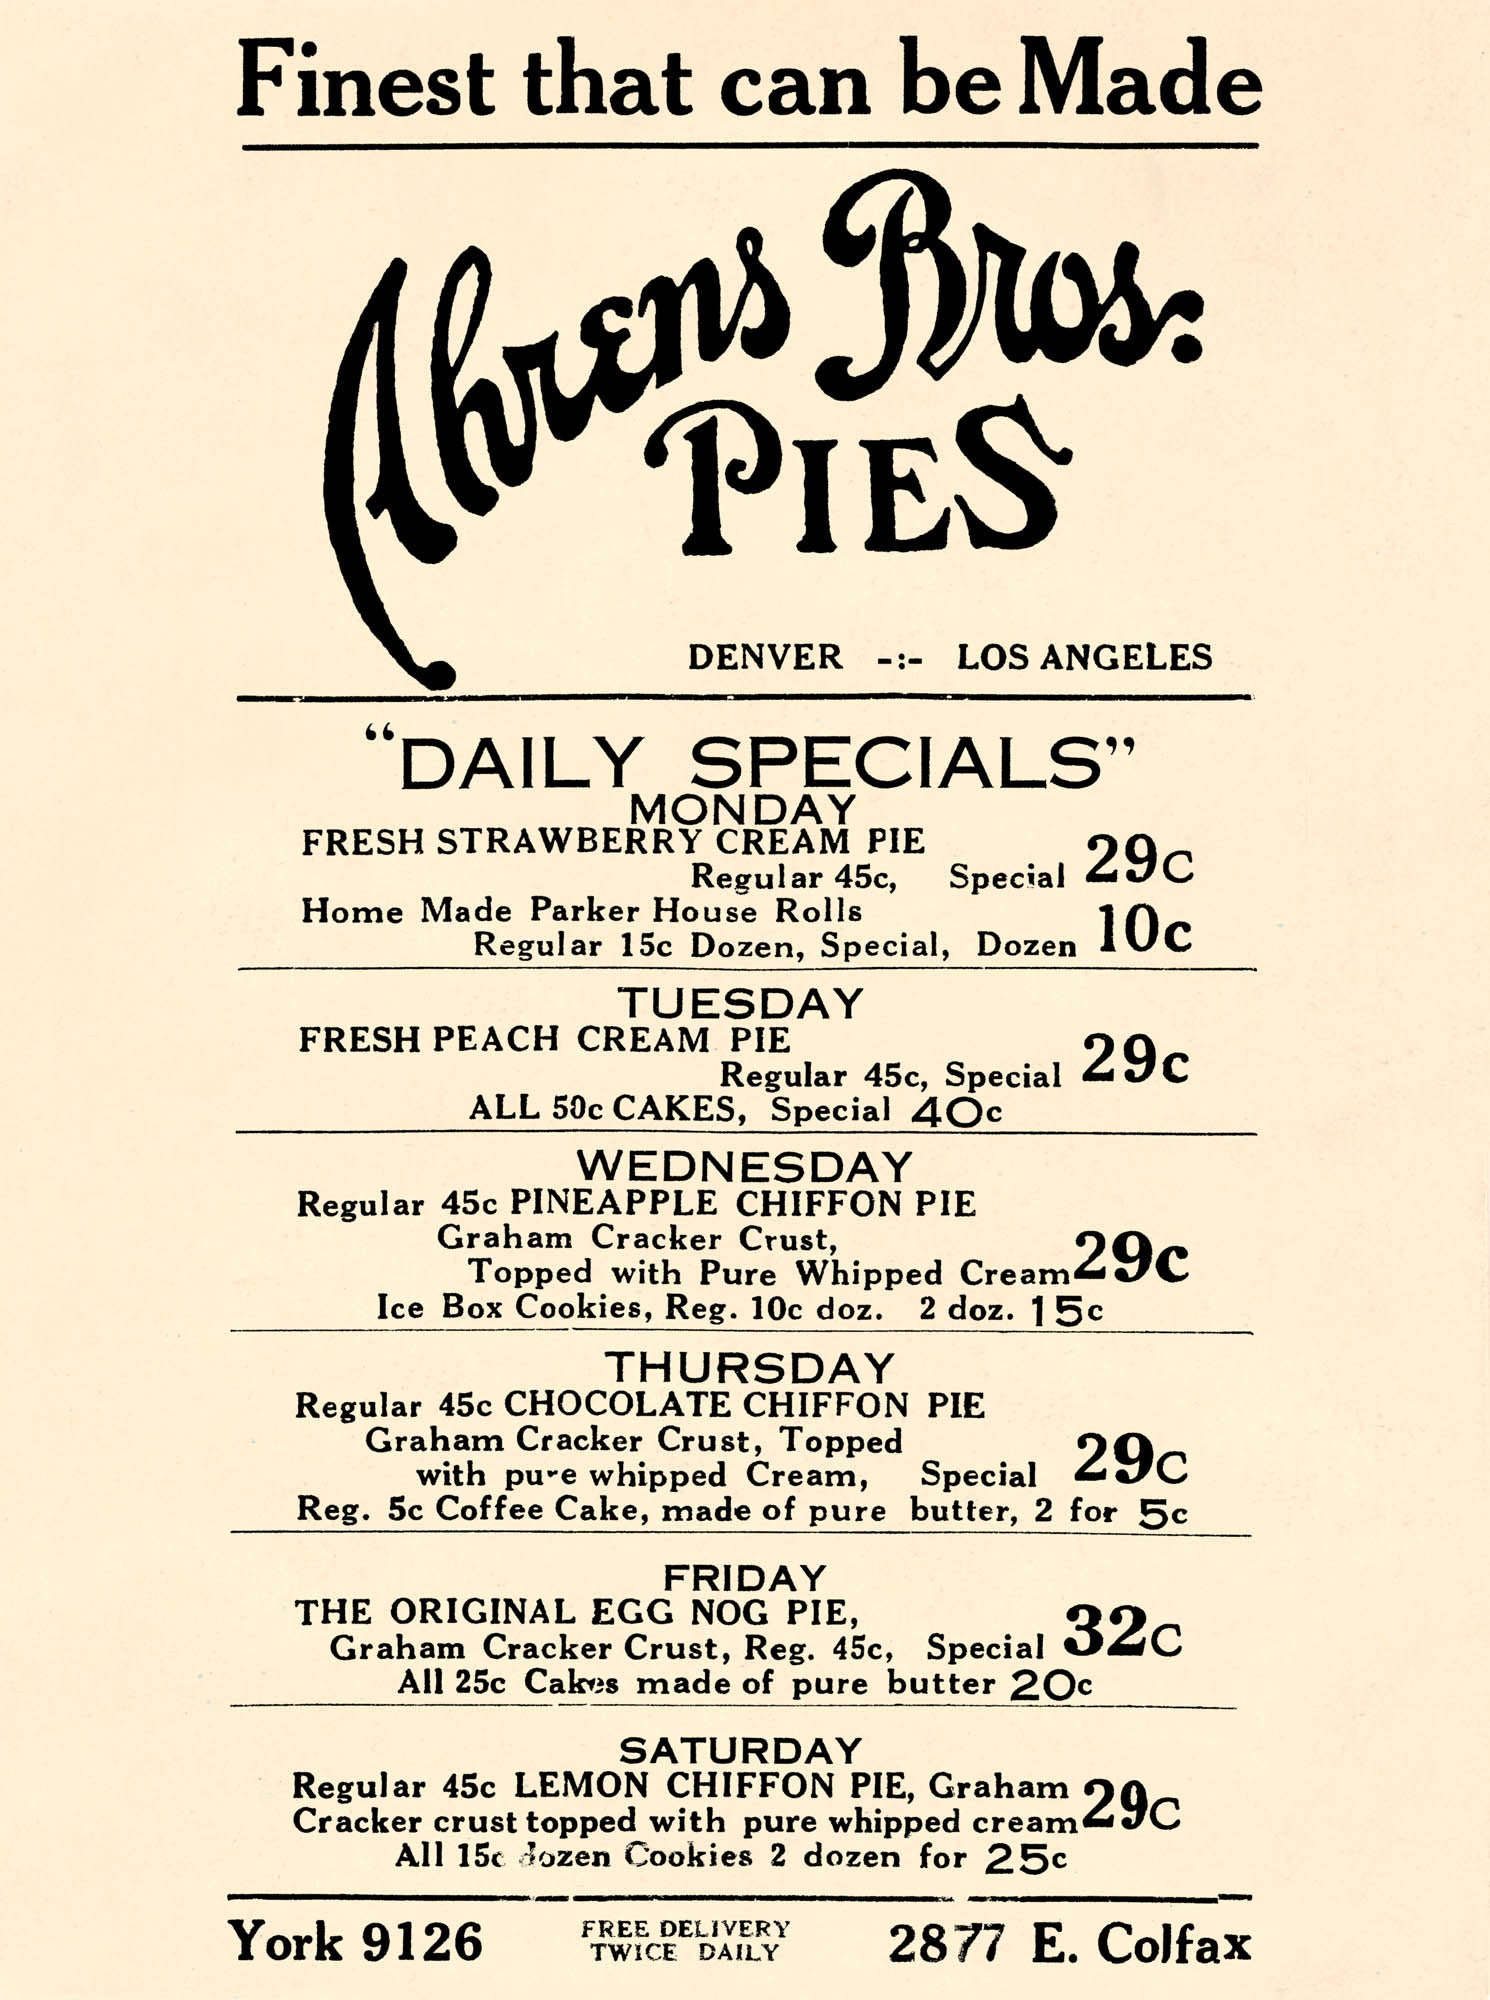 Ahrens Bros Pies Denver and Los Angeles 1930s menu